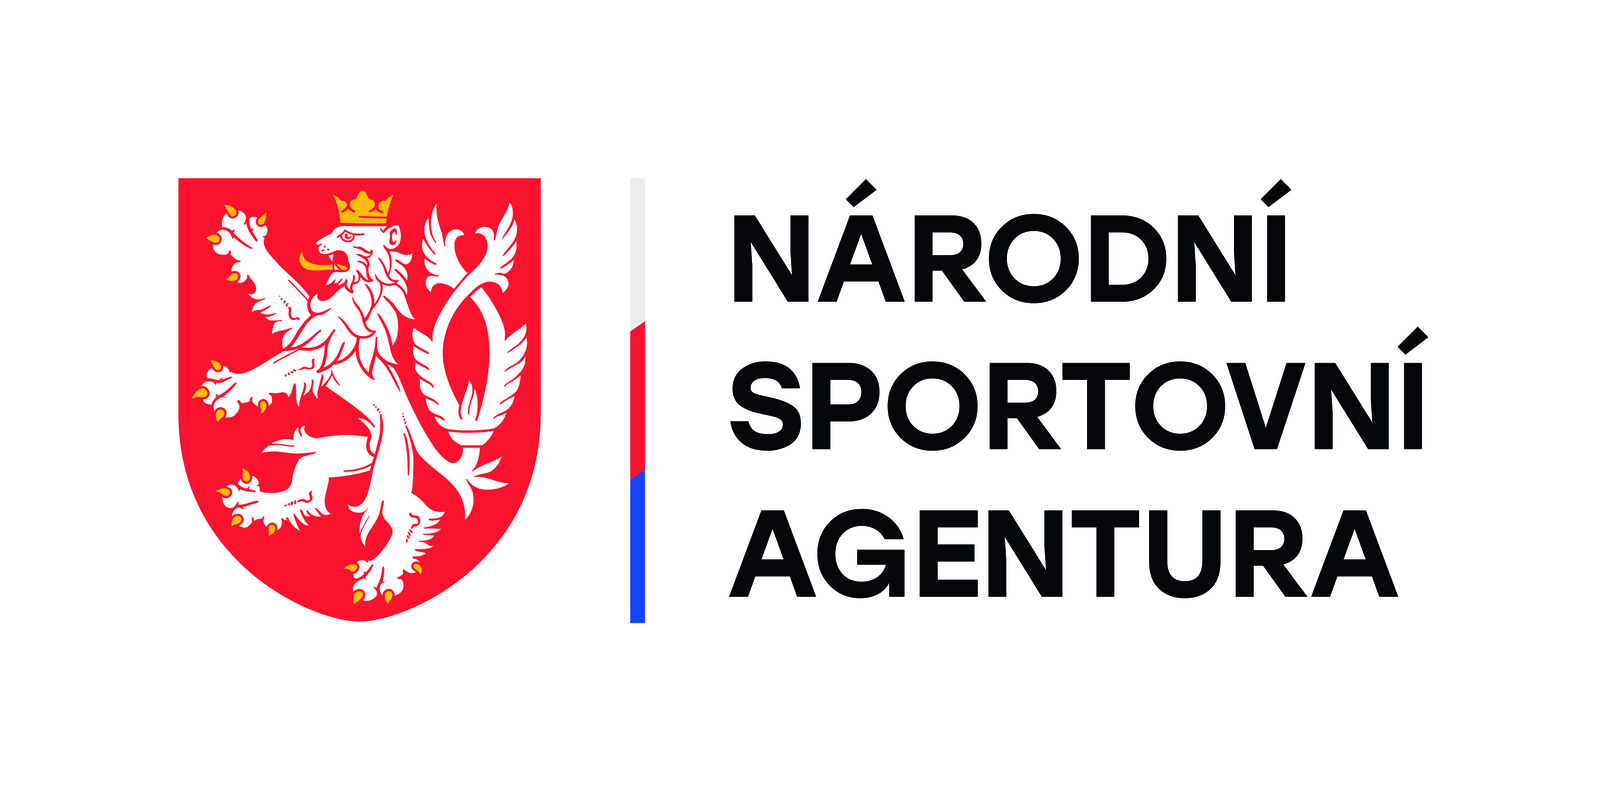 Narodni sportovni agentura_logo cmyk.jpg